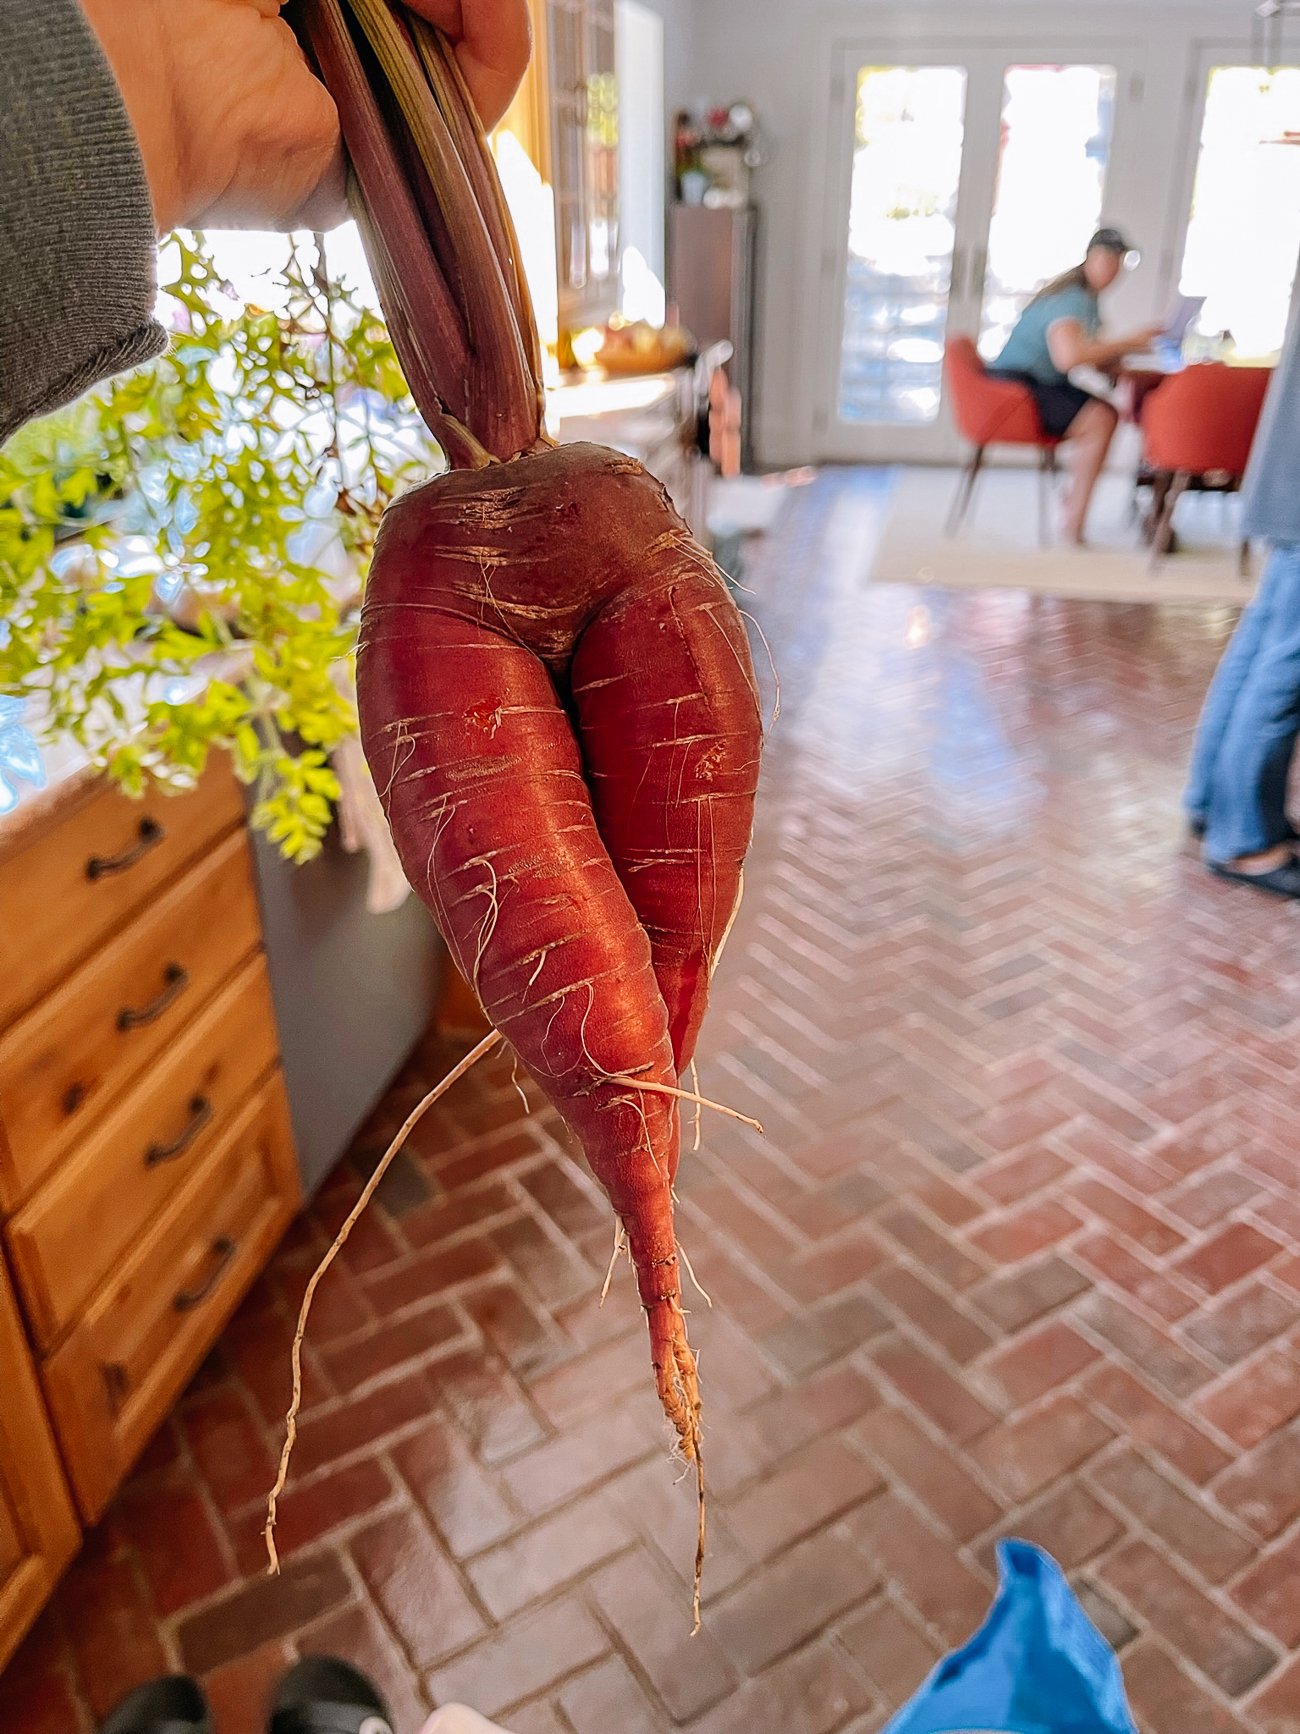 carrot that looks like legs